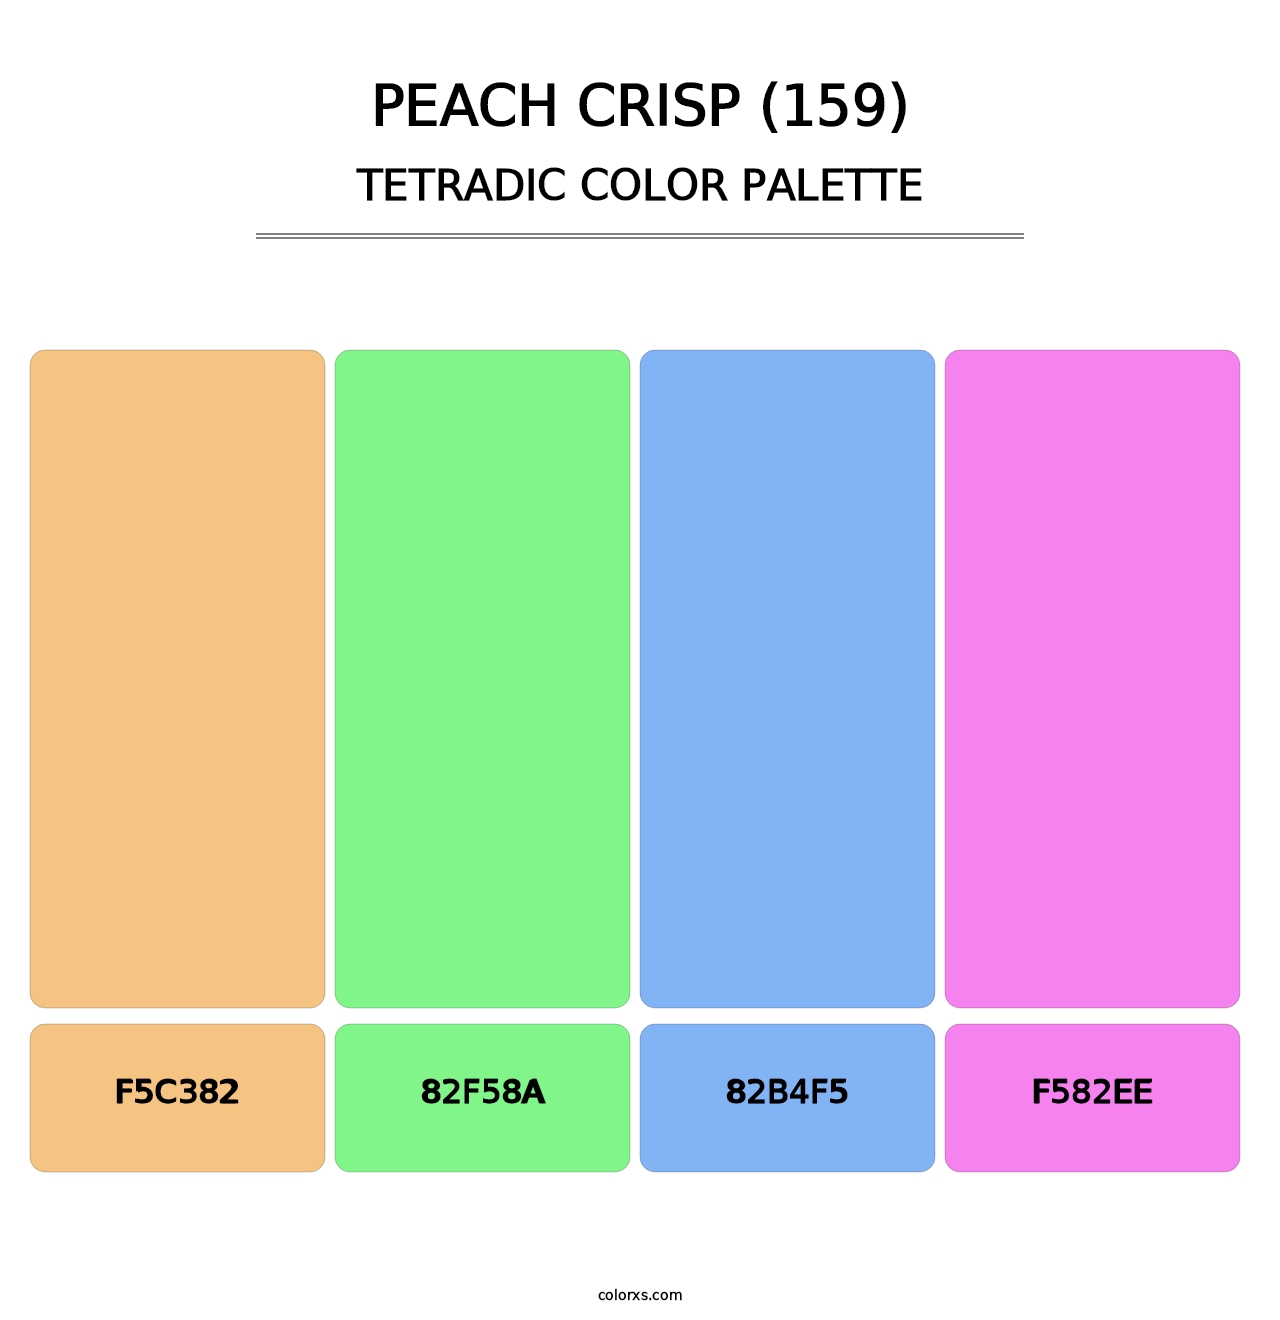 Peach Crisp (159) - Tetradic Color Palette